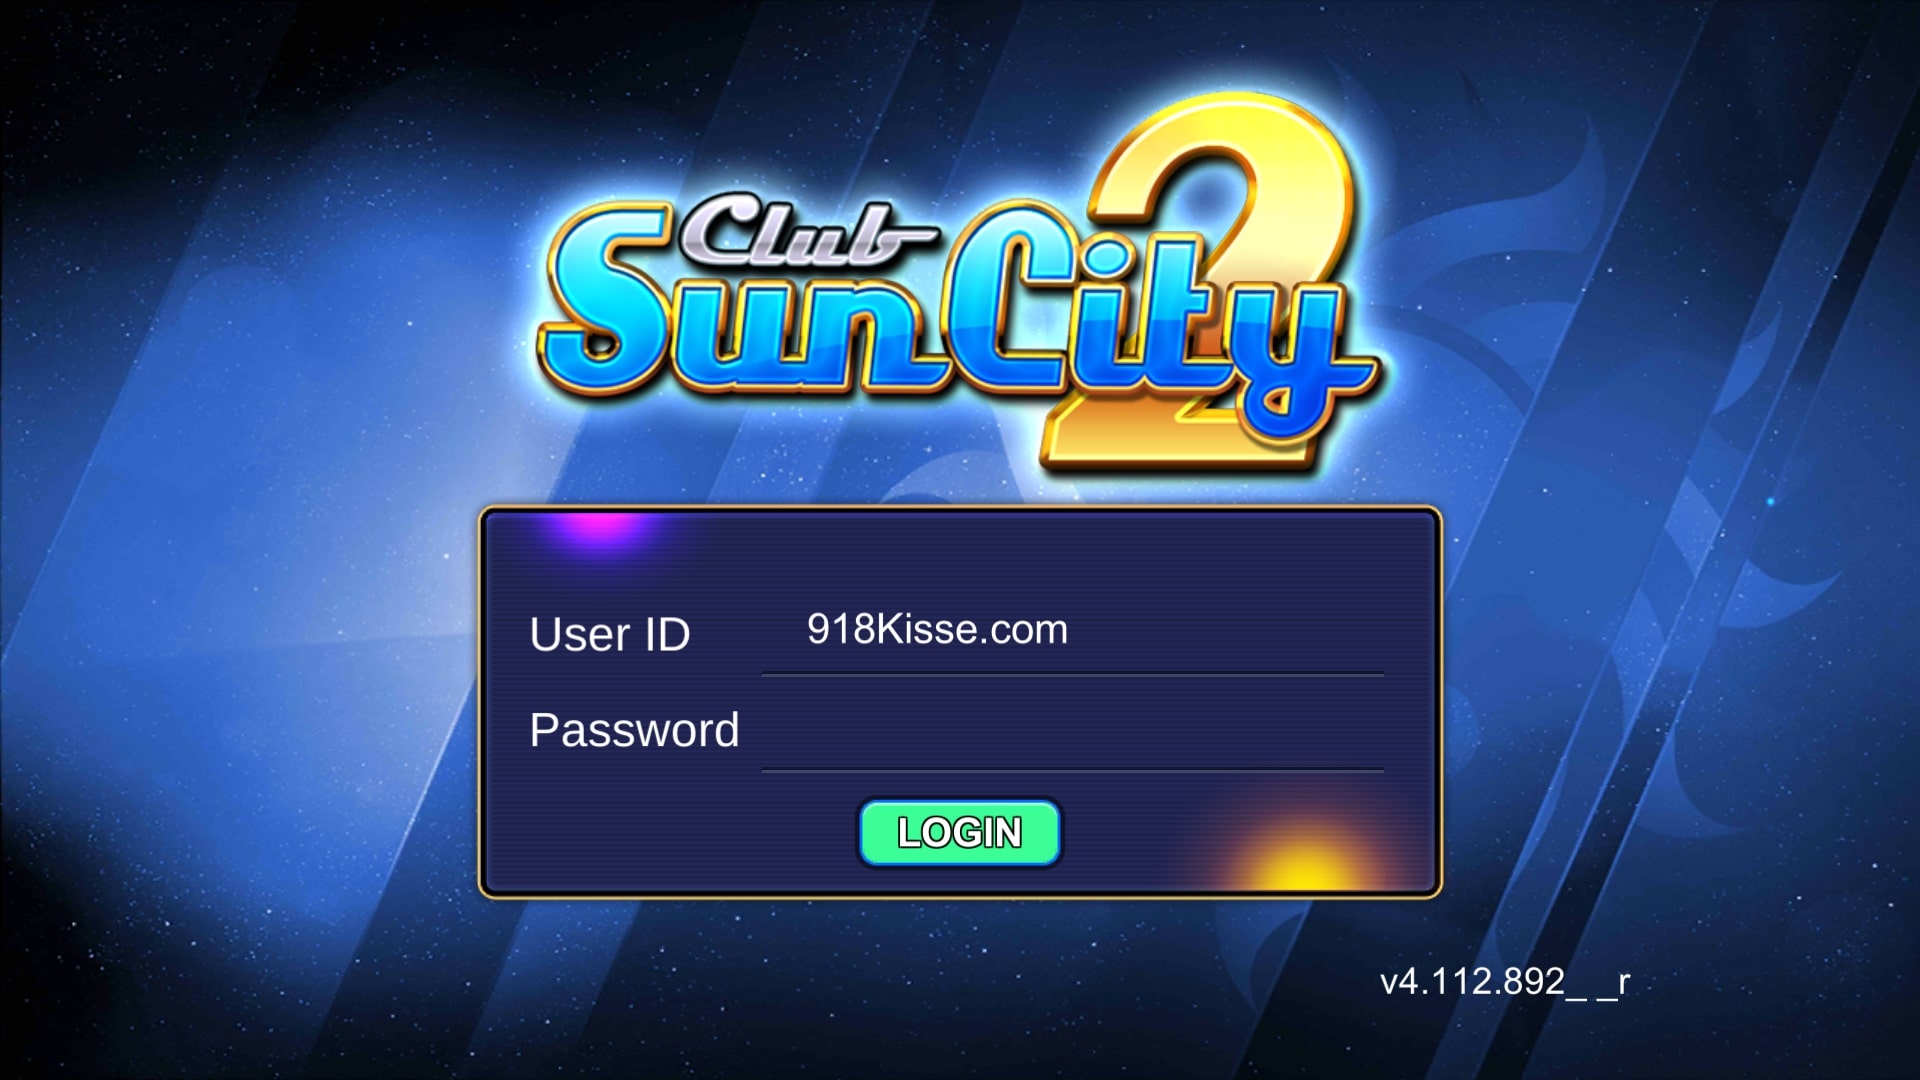 Clubsuncity Apk Download